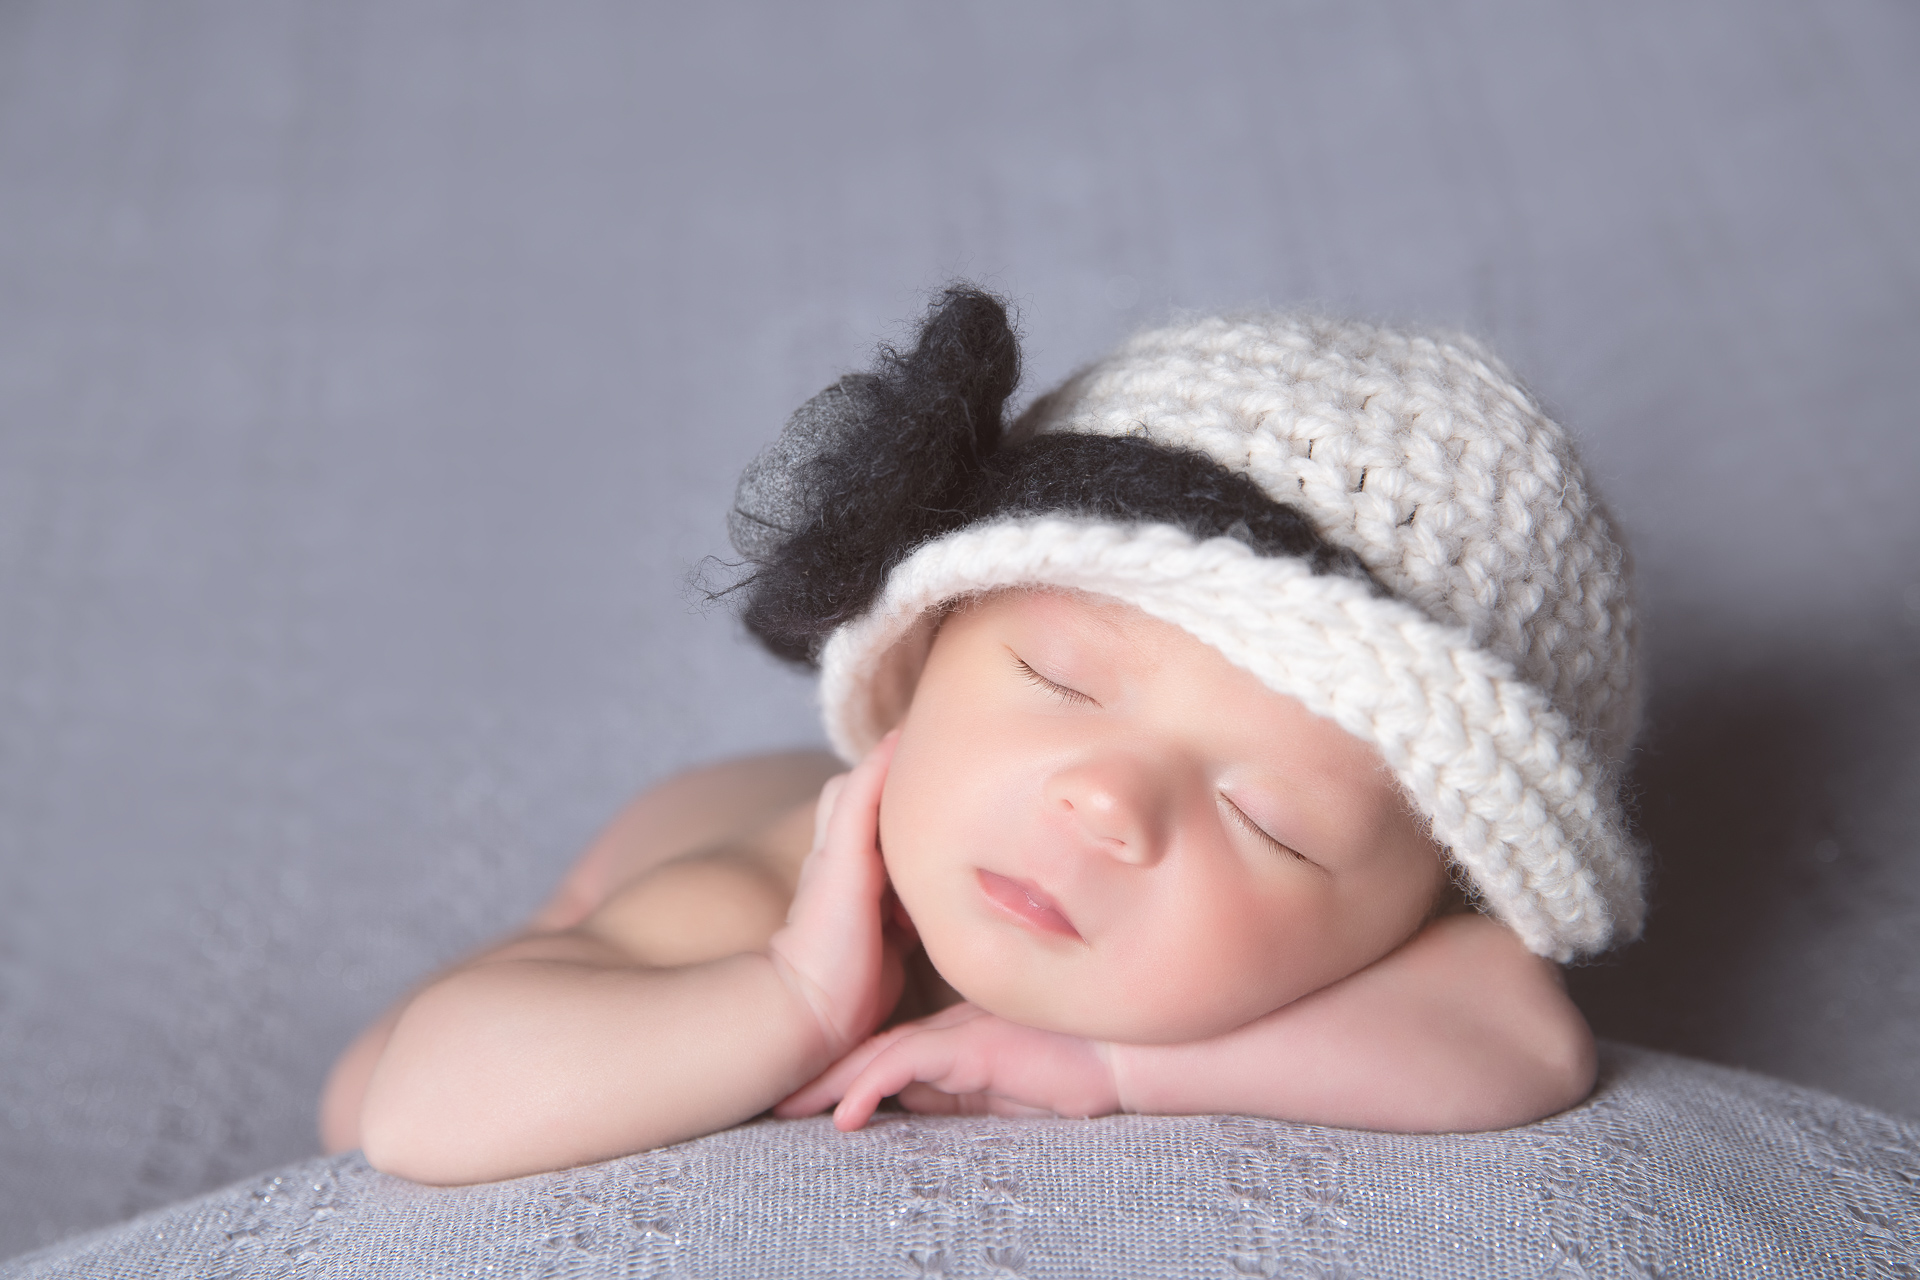 Newborn white white and dark blue hat rests on gray background